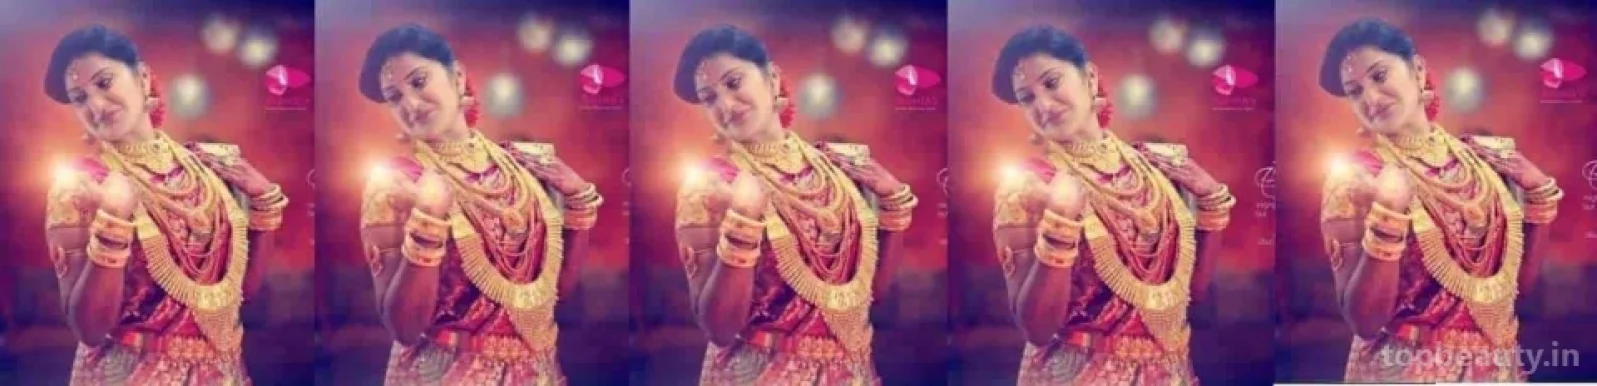 Jukrith Best Professional Bridal Makeup Artist in Chennai, Chennai - Photo 3